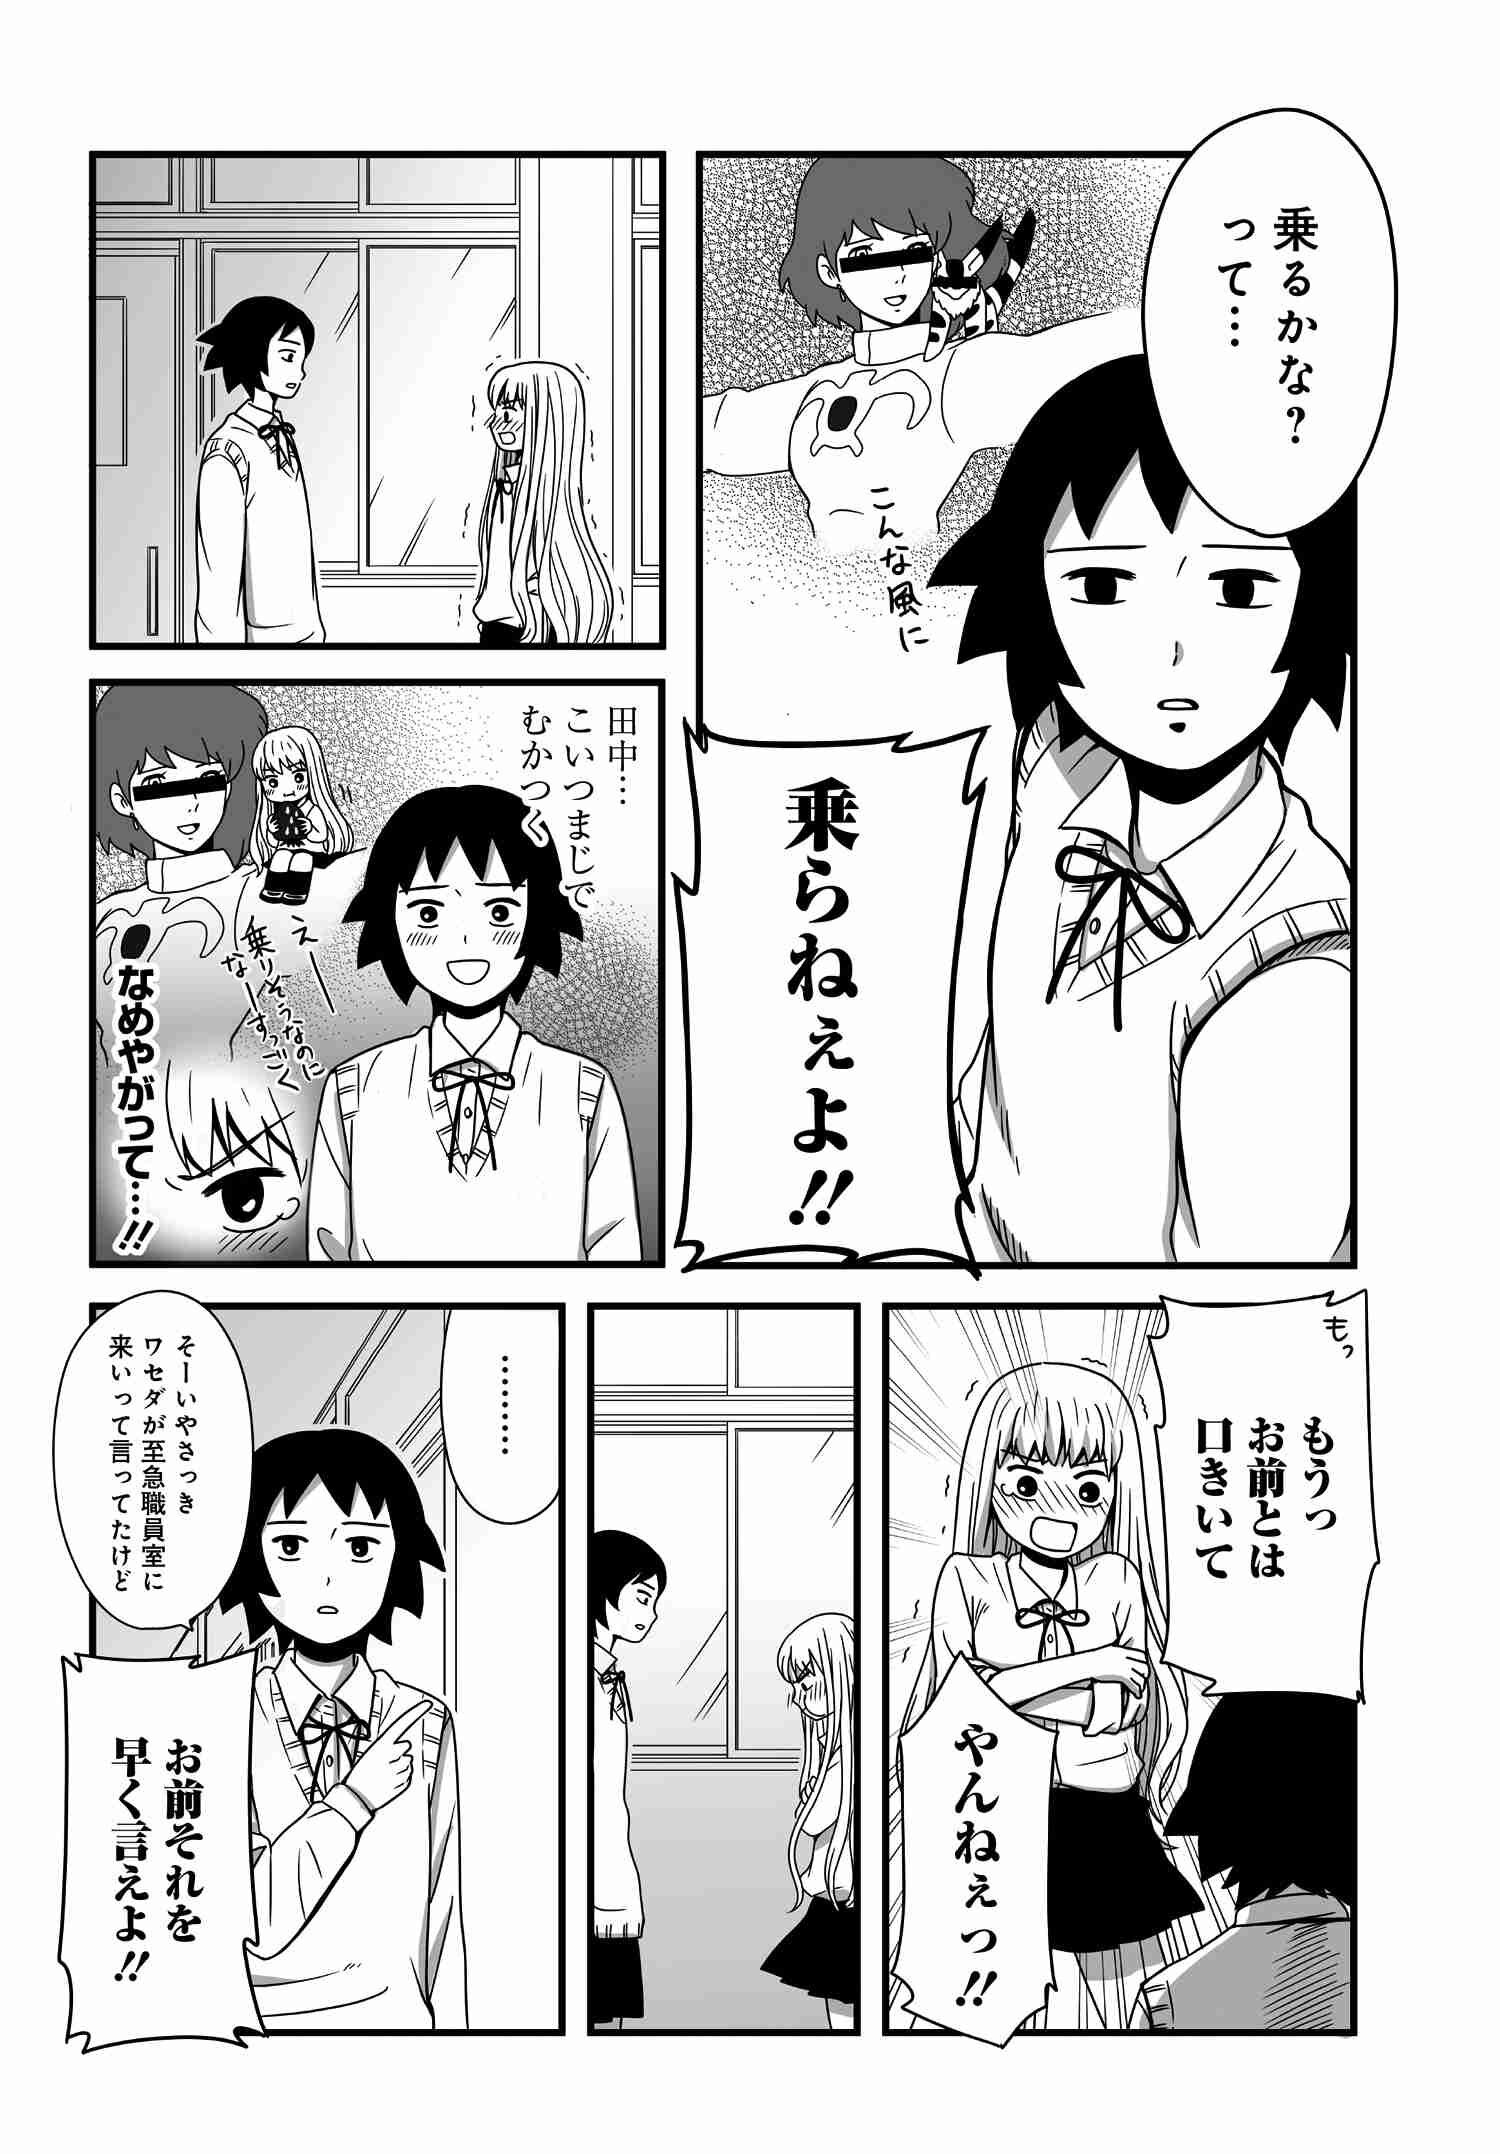 Joshikousei no Mudazukai - Chapter 011 - Page 2